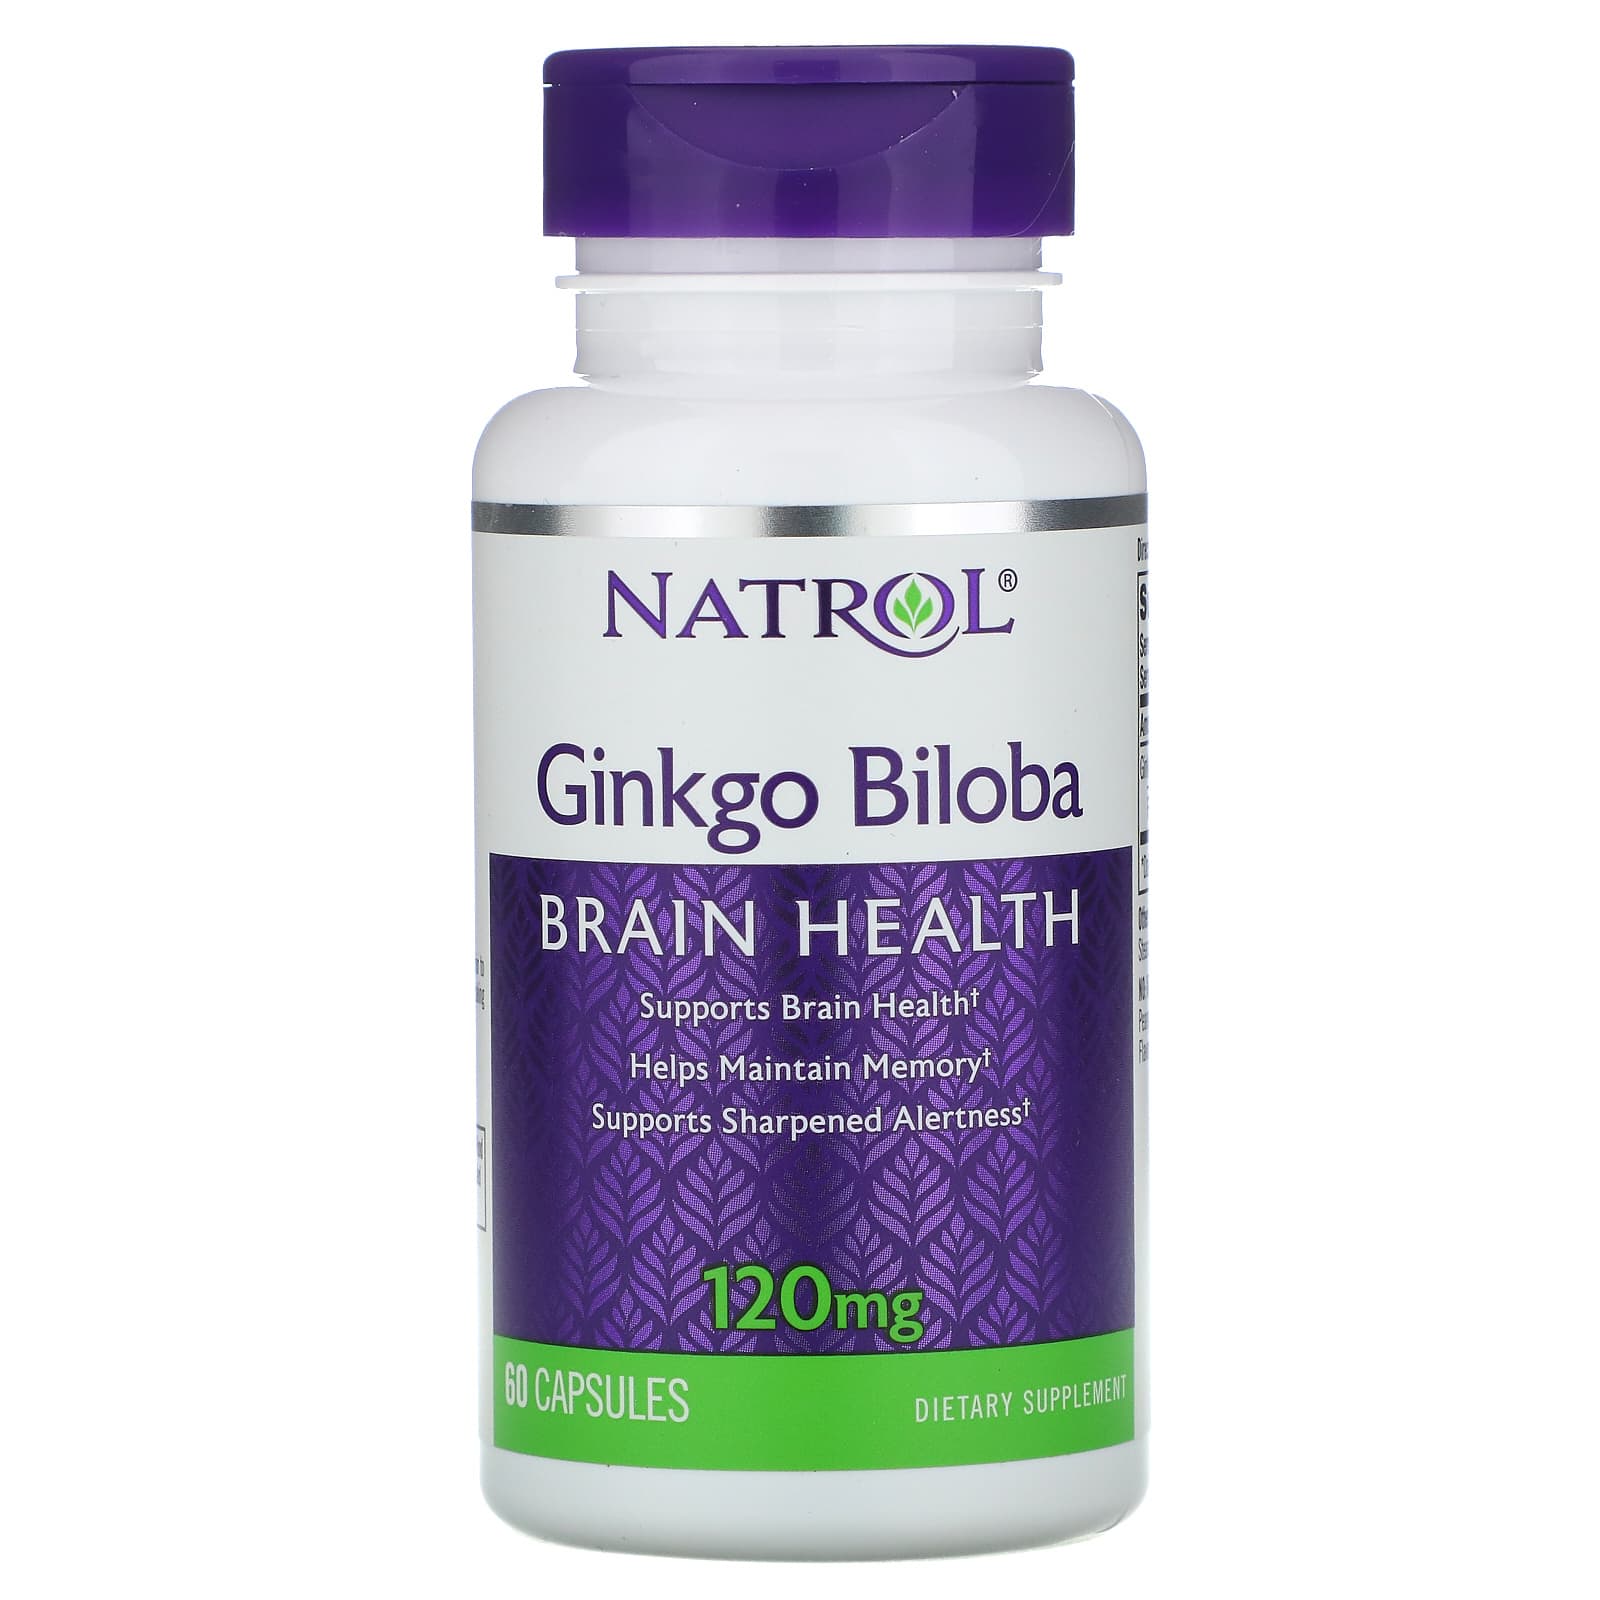 Natrol ginkgo biloba supplement 120 mg brain health capsules - 60 Caps